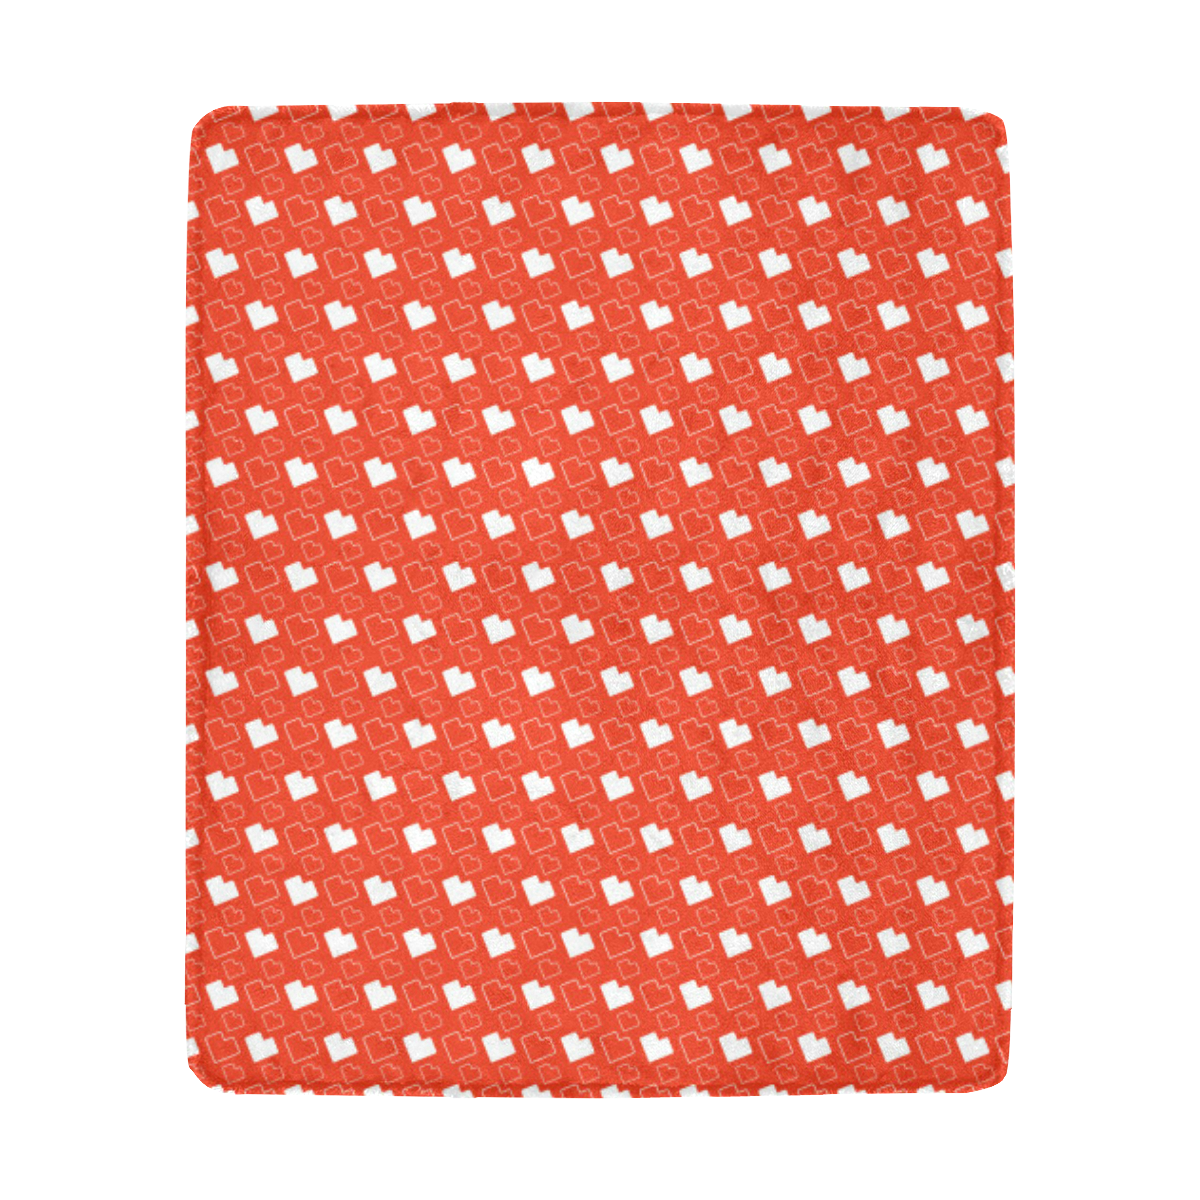 Polka heart Red Ultra-Soft Micro Fleece Blanket 50"x60"